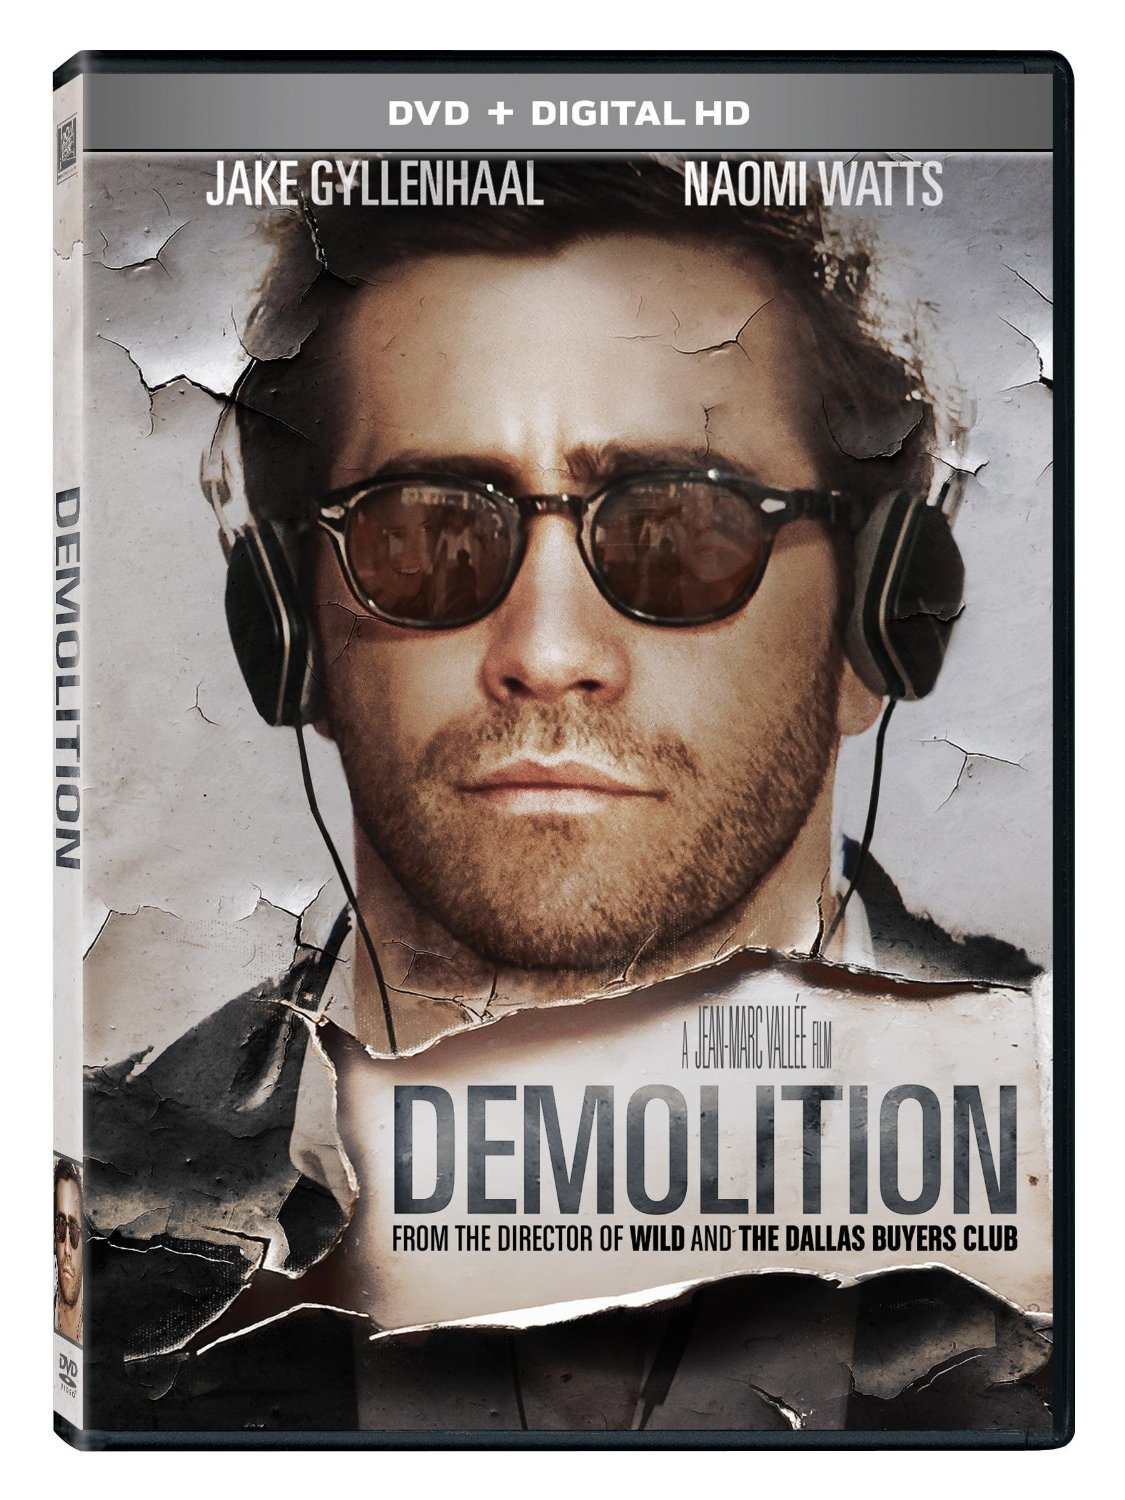 Demolition DVD cover